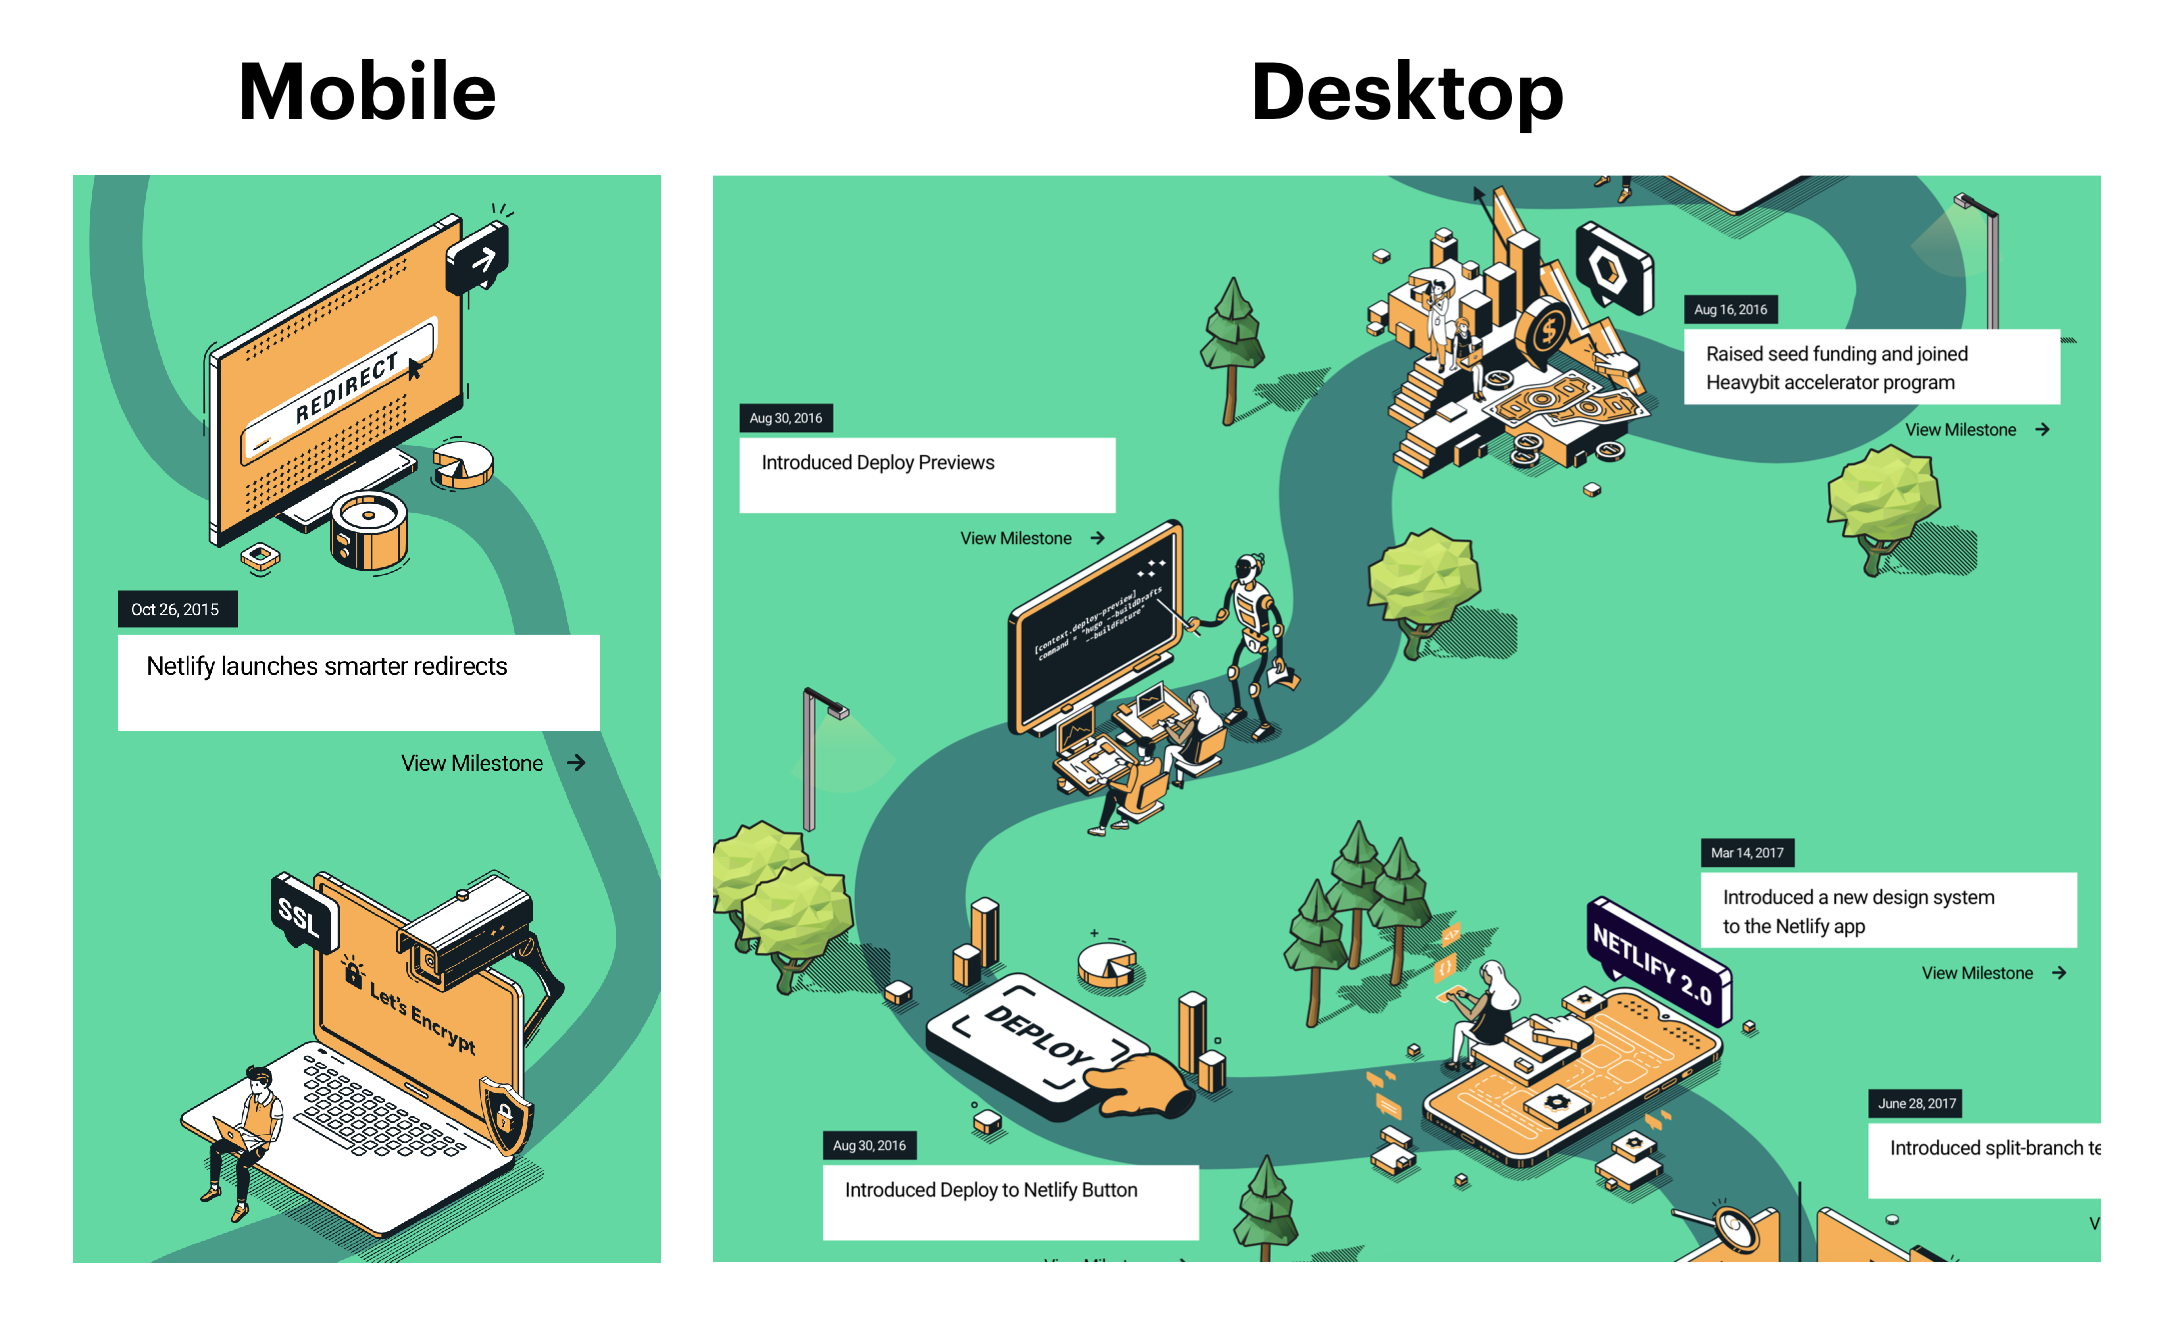 Million Devs site: mobile and desktop versions compared. 